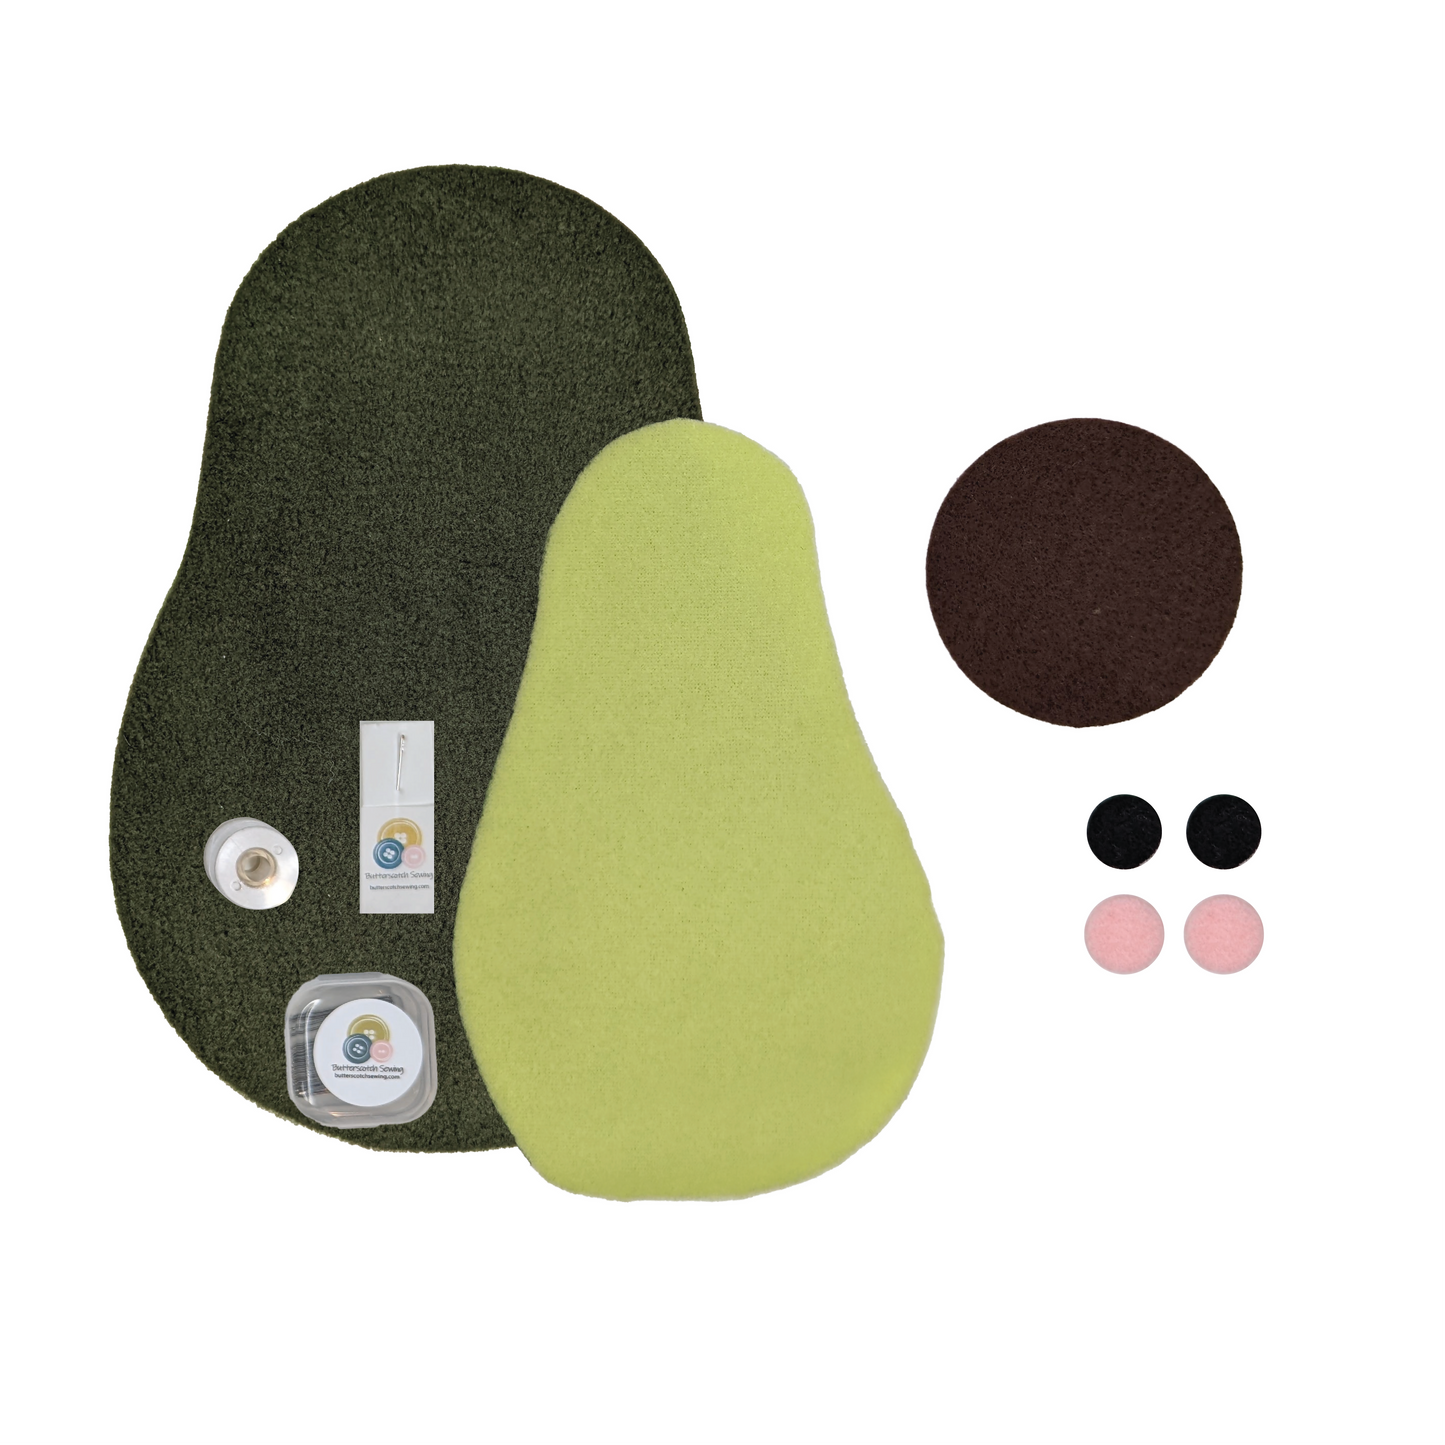 The Avocado Sewing Kit